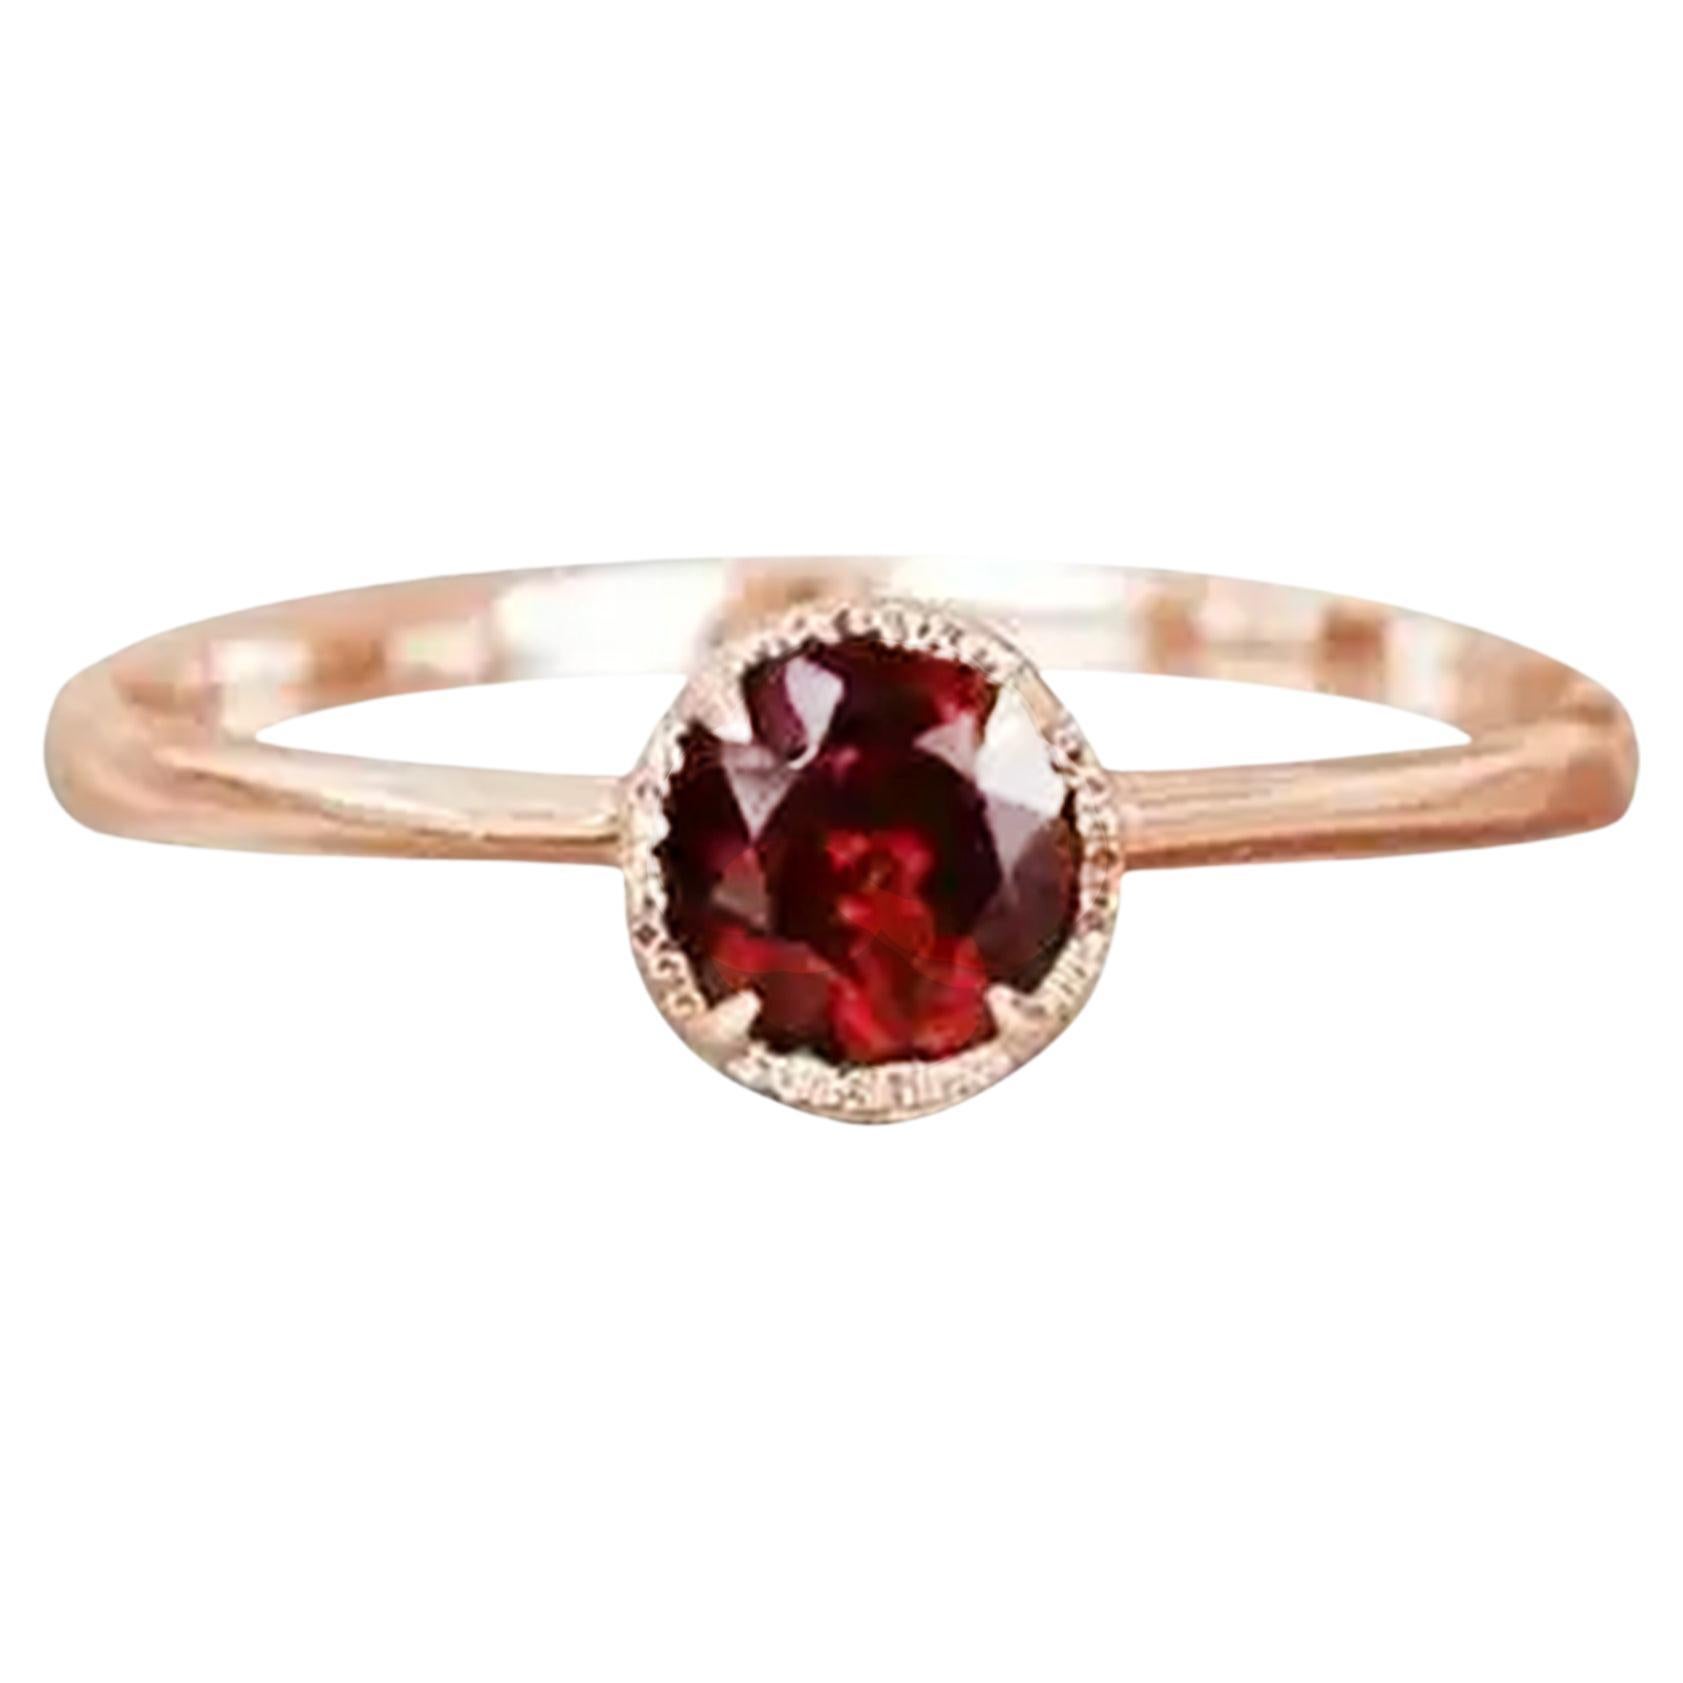 For Sale:  14k Gold Round Gemstone 5 mm Round Shaped Gemstone Ring Gemstone Stacking Ring